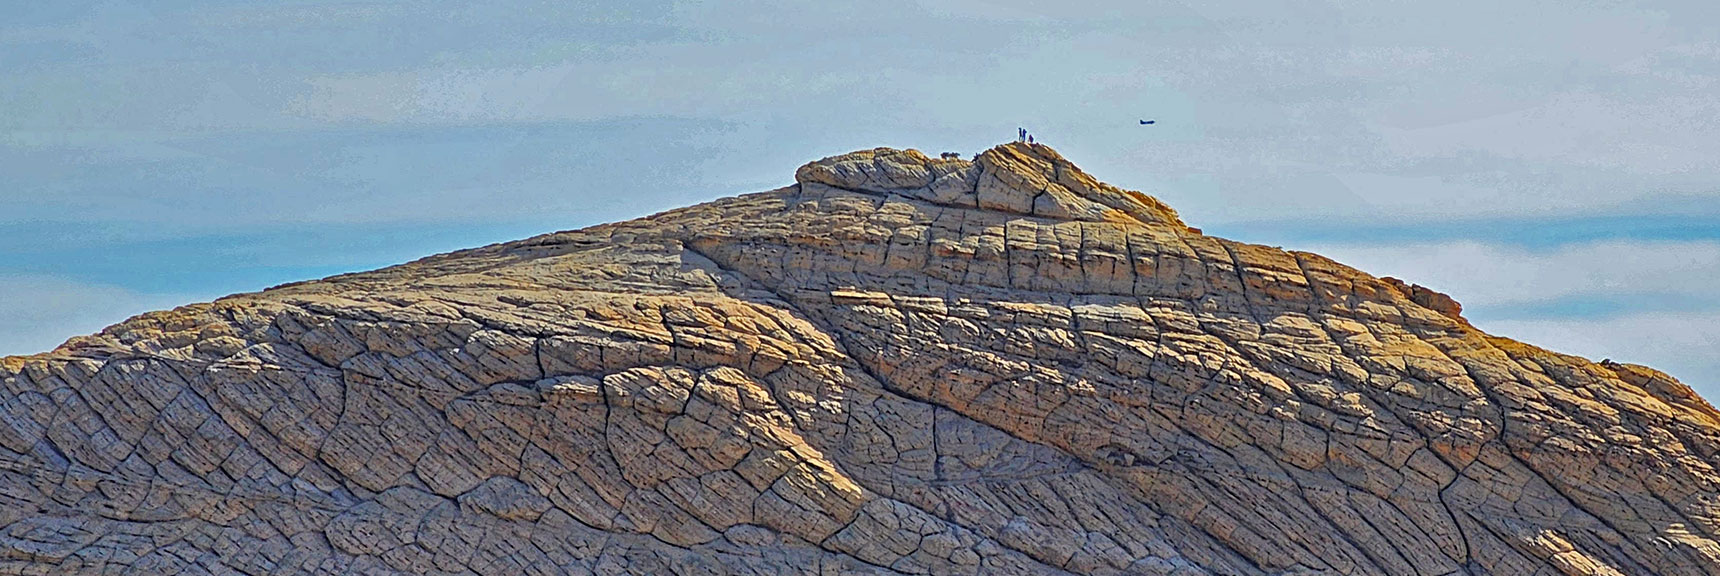 Climbers on Bridge Mountain Summit Watch Plane Passing Overhead | North Upper Crest Ridgeline | Rainbow Mountain Wilderness, Nevada